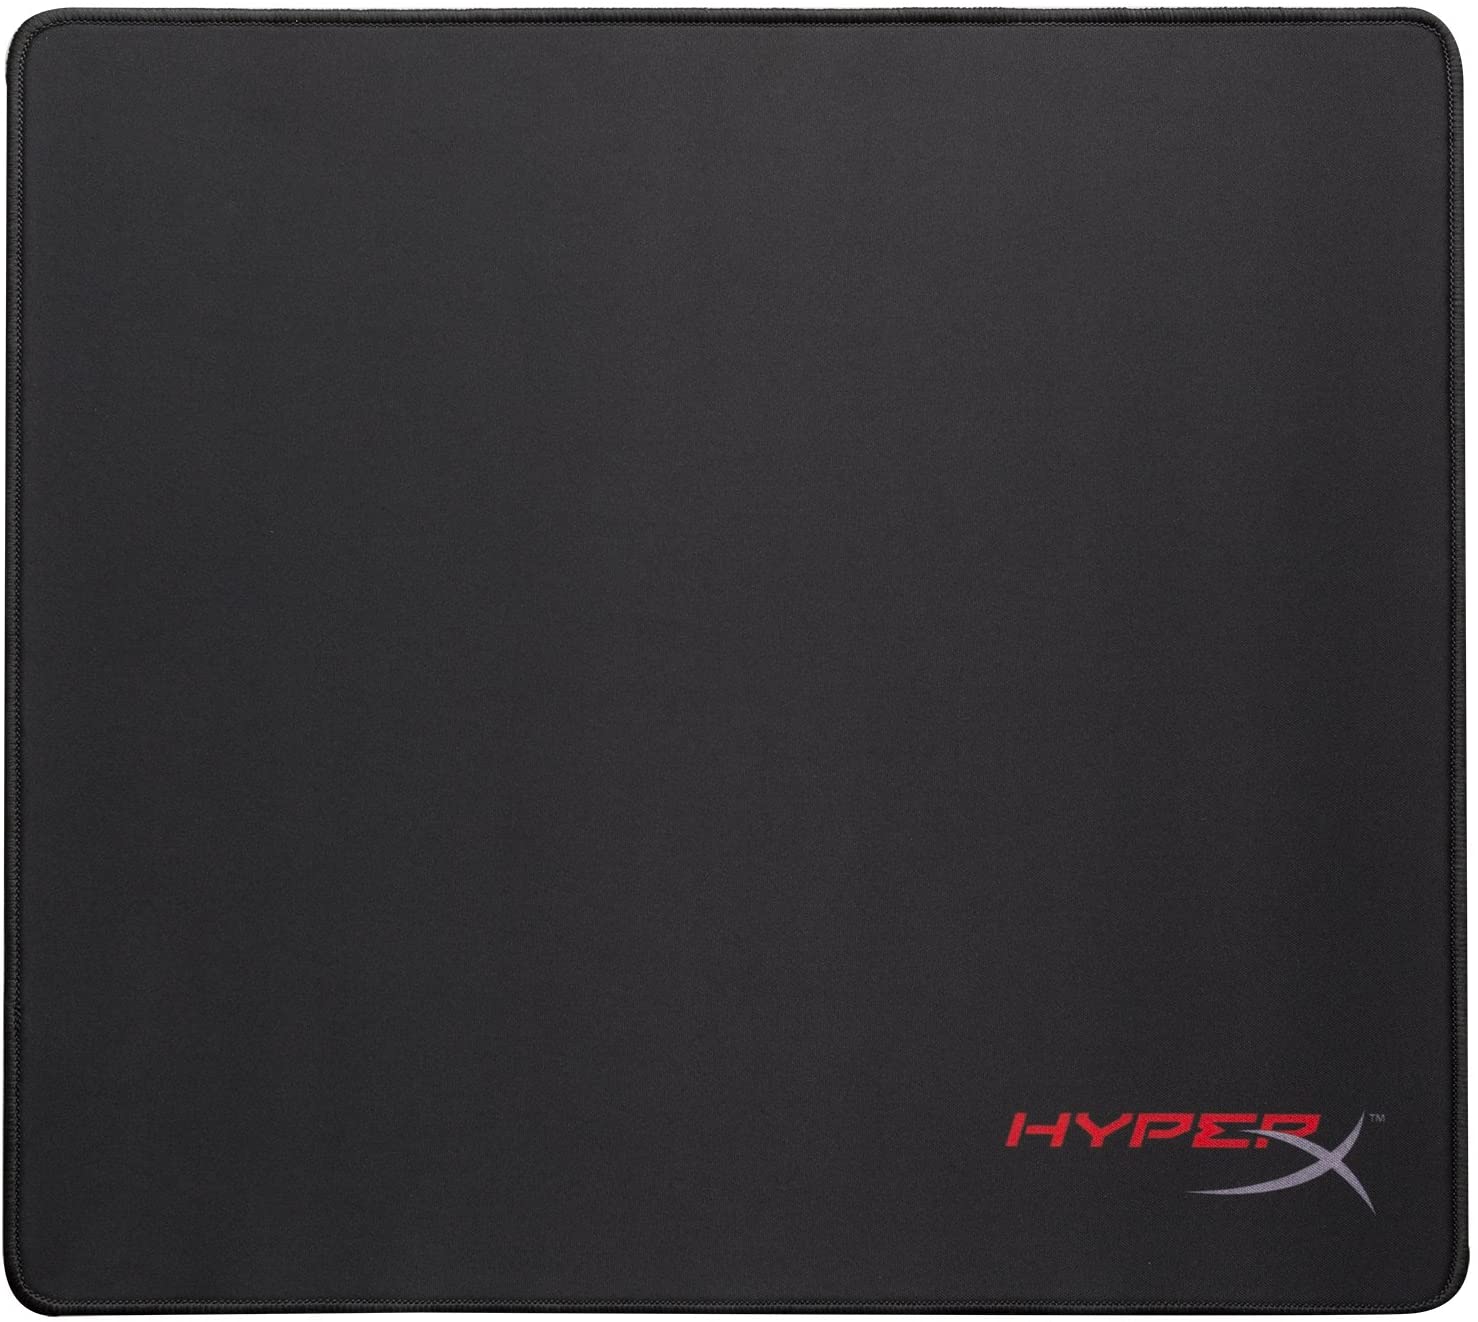 HyperX FURY S - Pro Gaming Large Mouse Pad - Black - Pro-Distributing